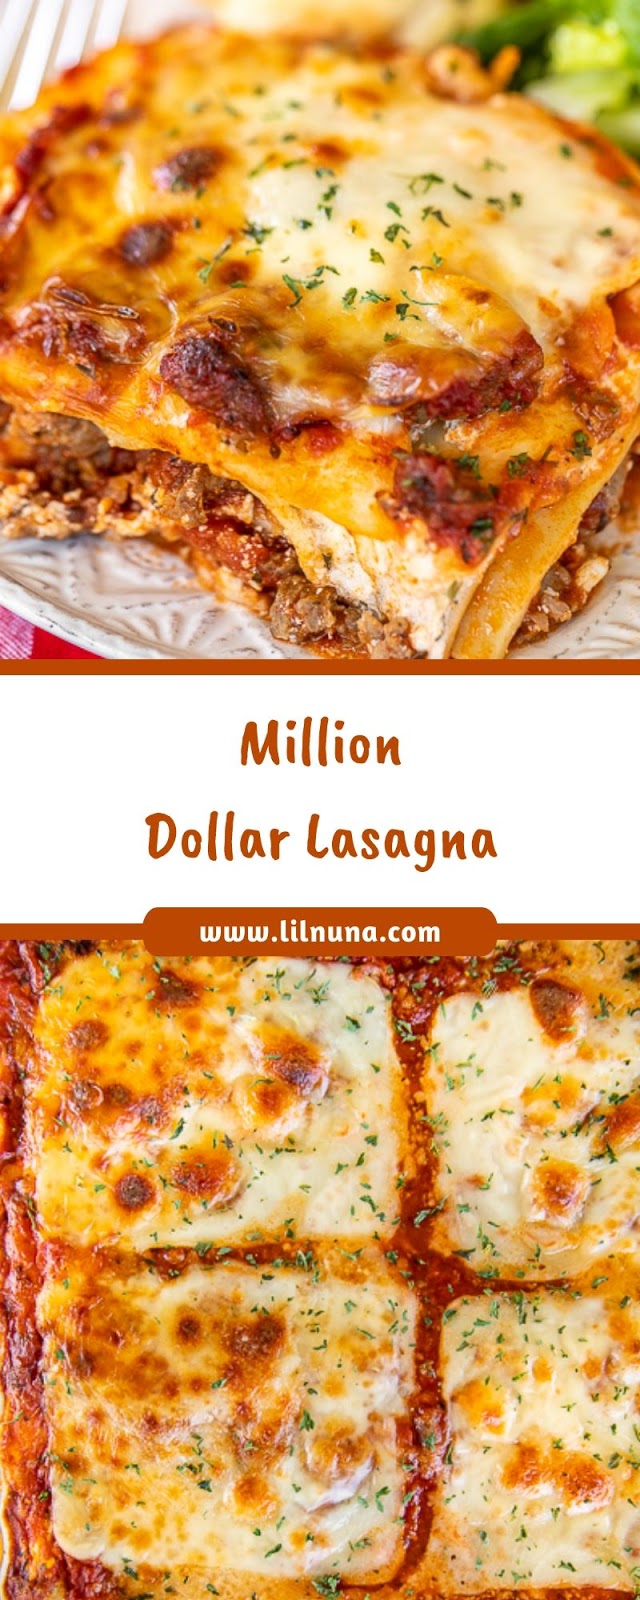 Million Dollar Lasagna